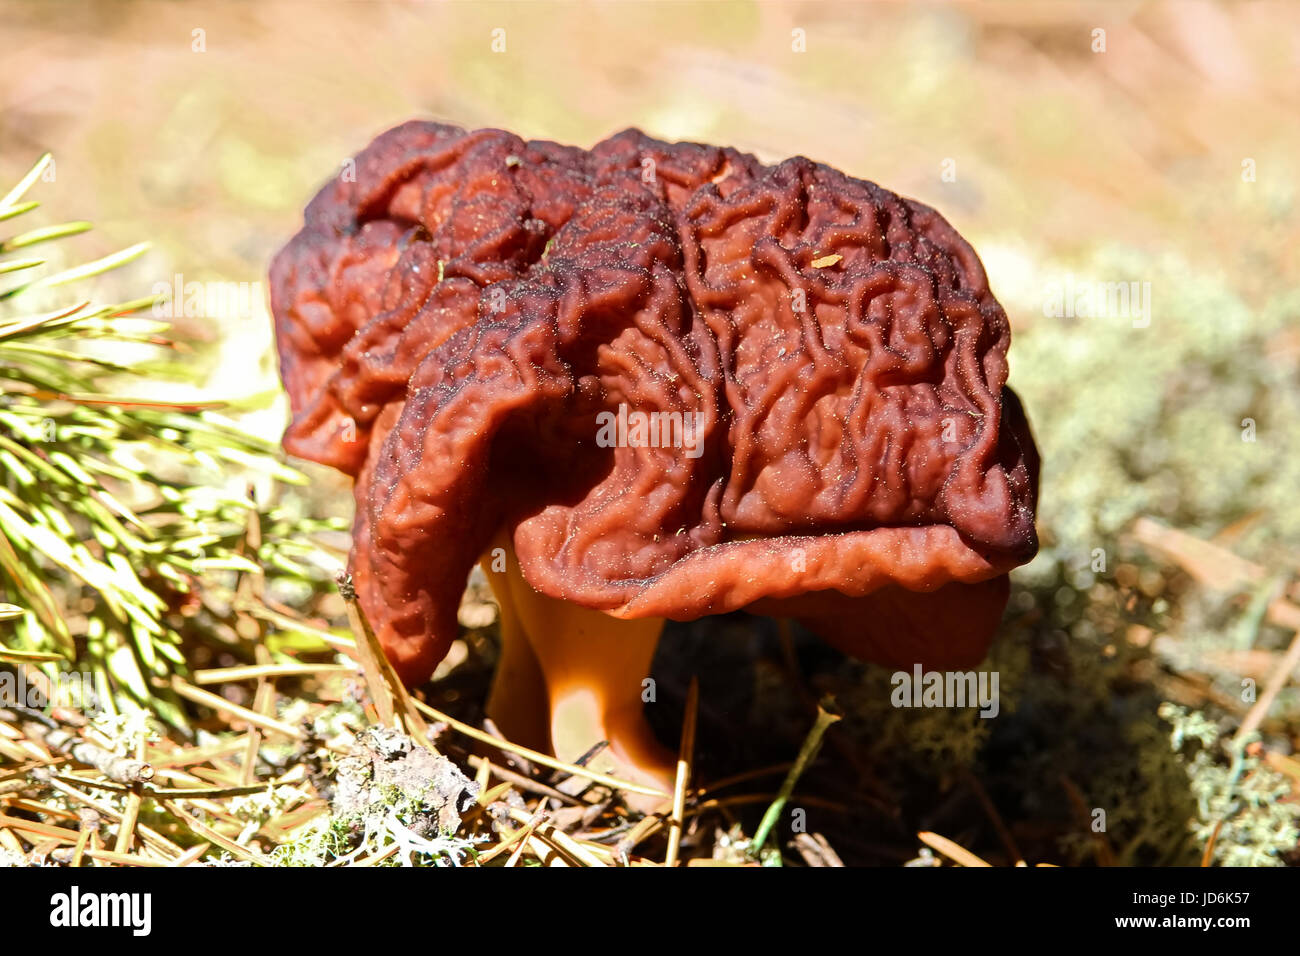 A poisonous False Morel mushroom. Stock Photo